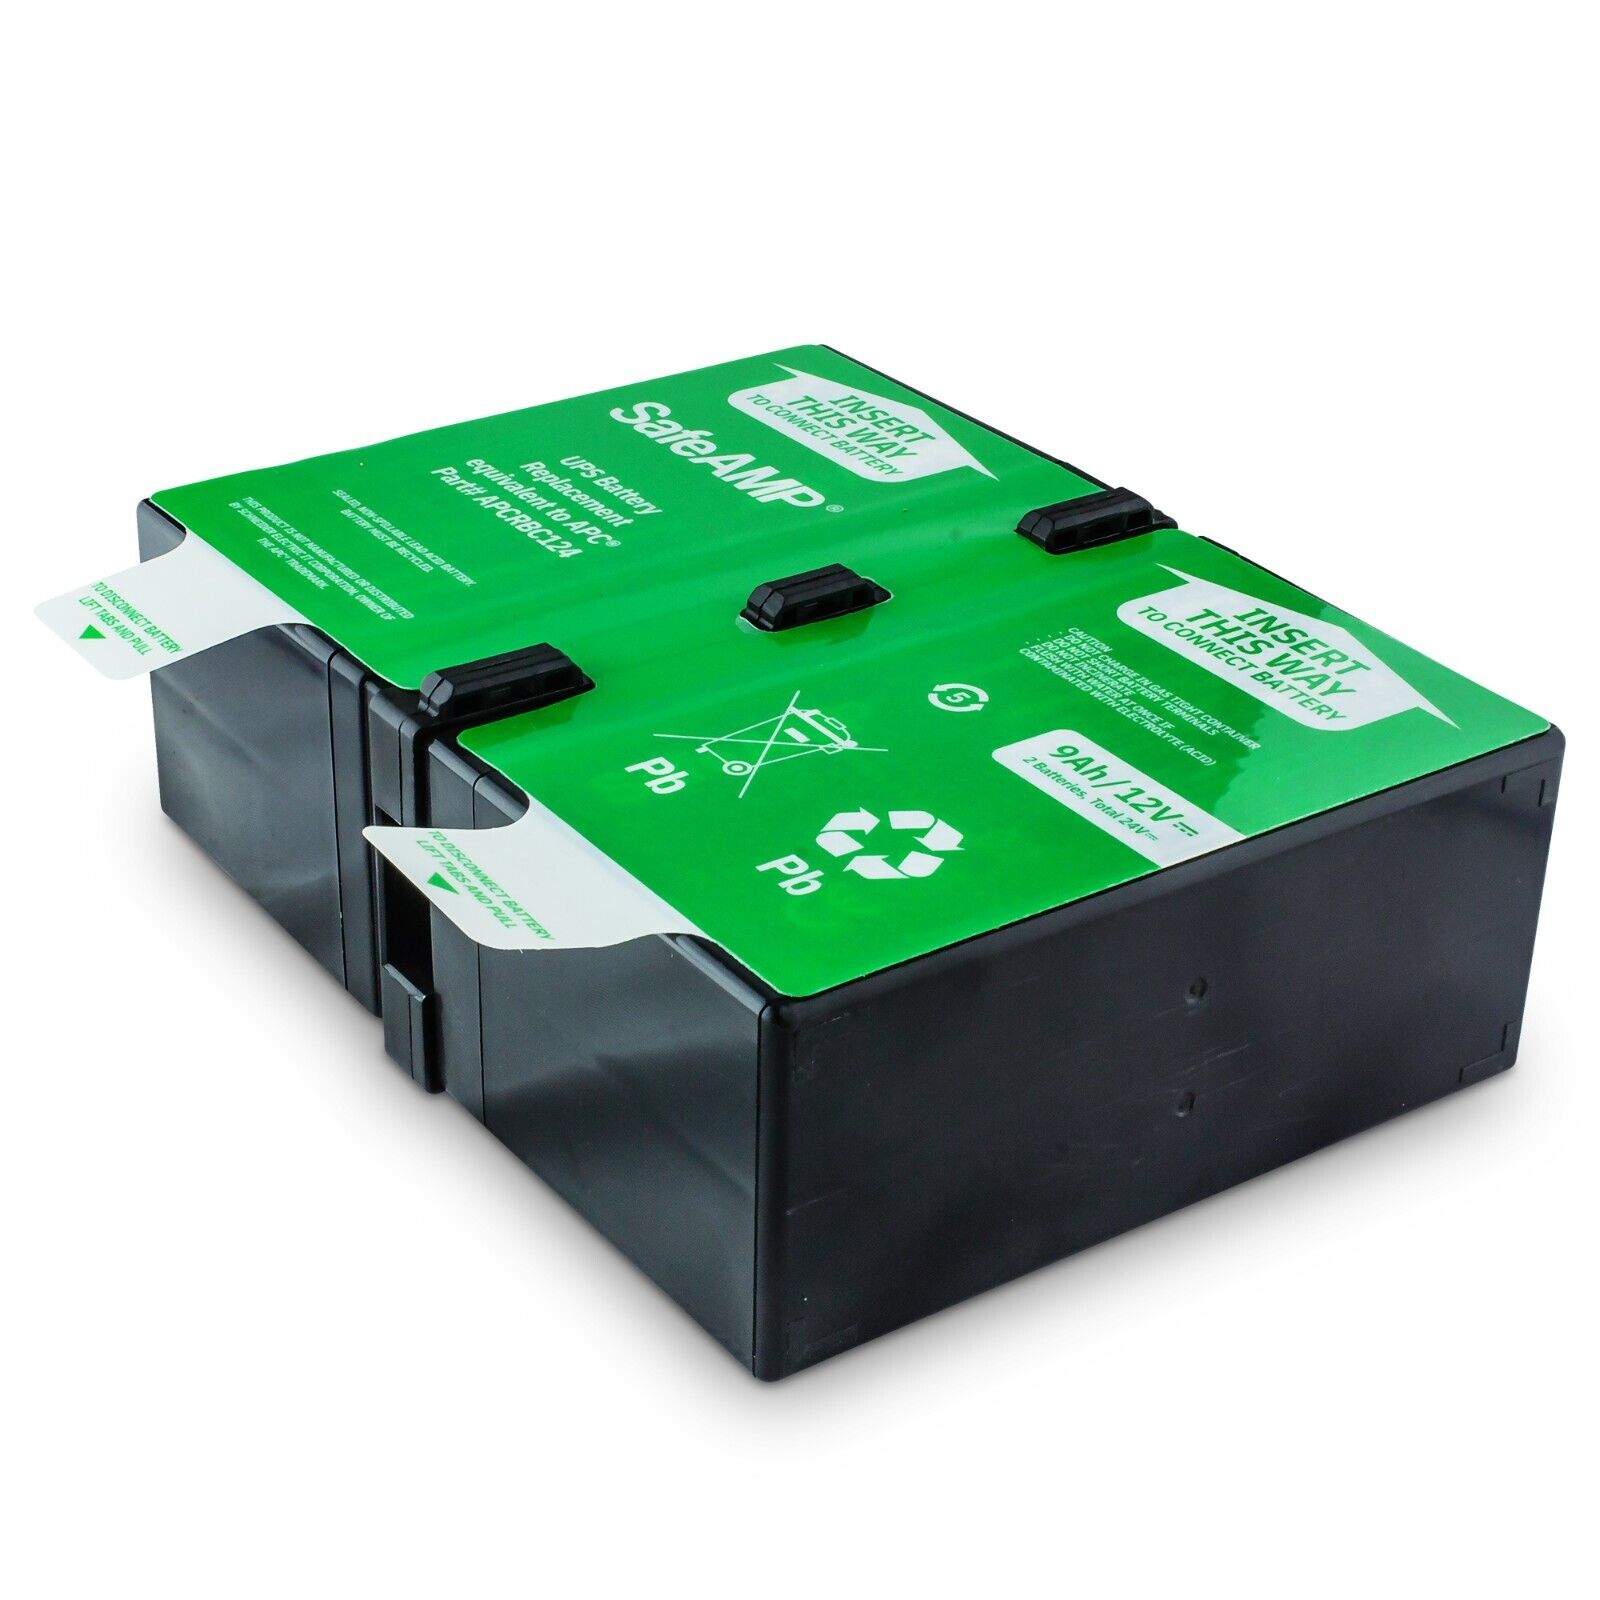 SafeAMP UPS 9Ah, 24VDC VRLA Battery Replace APC Models RBC124 and RBC123.